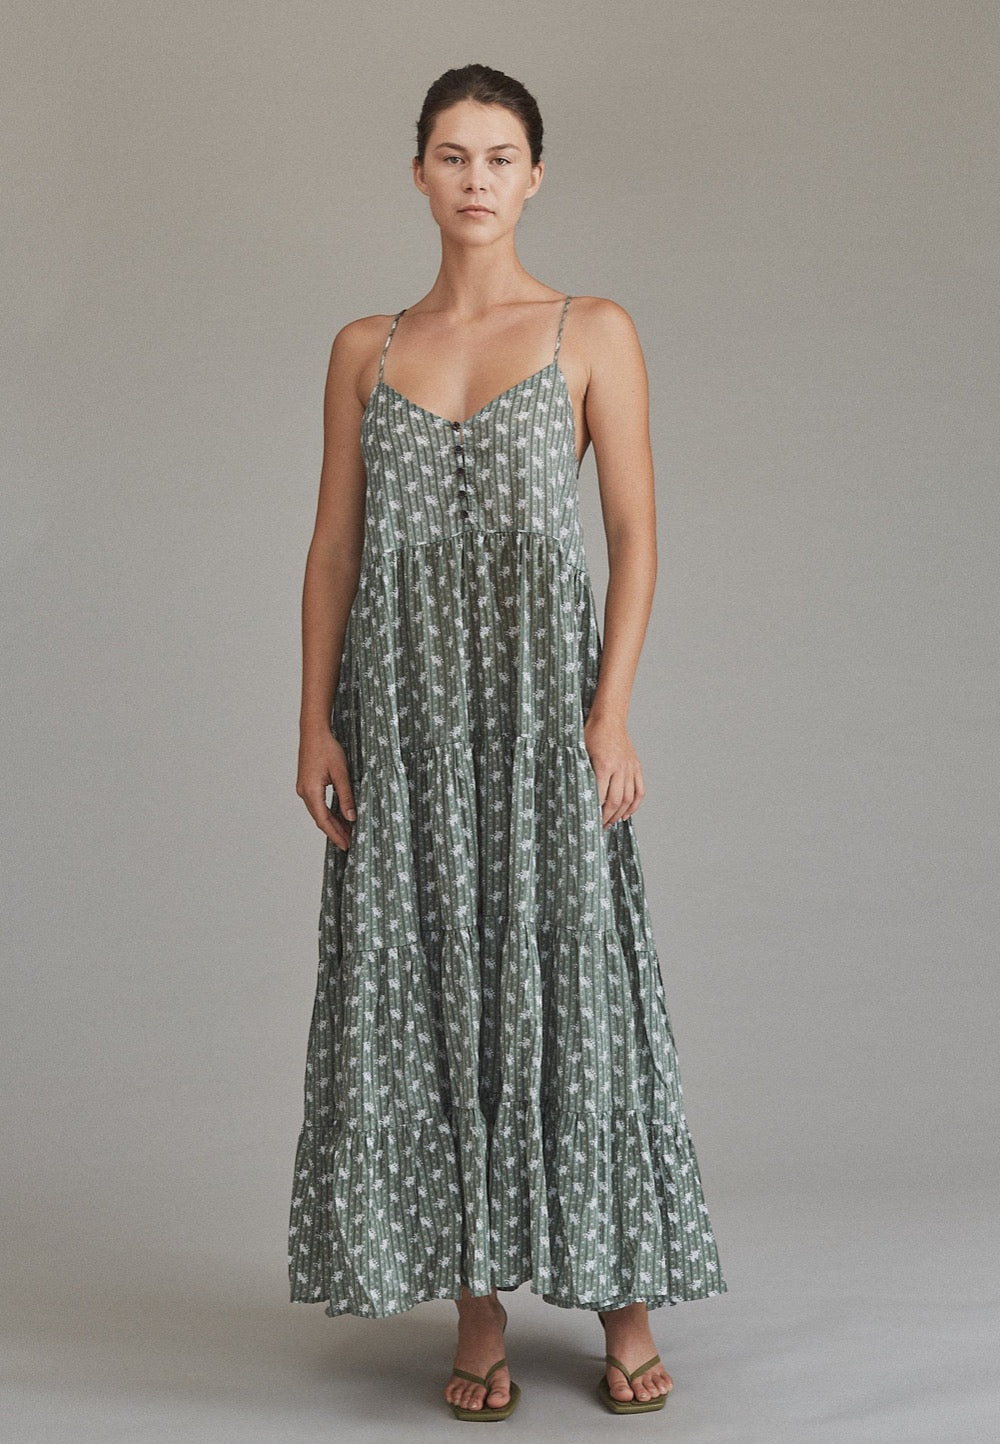 Acacia Swimwear Jade Dress |Punahele